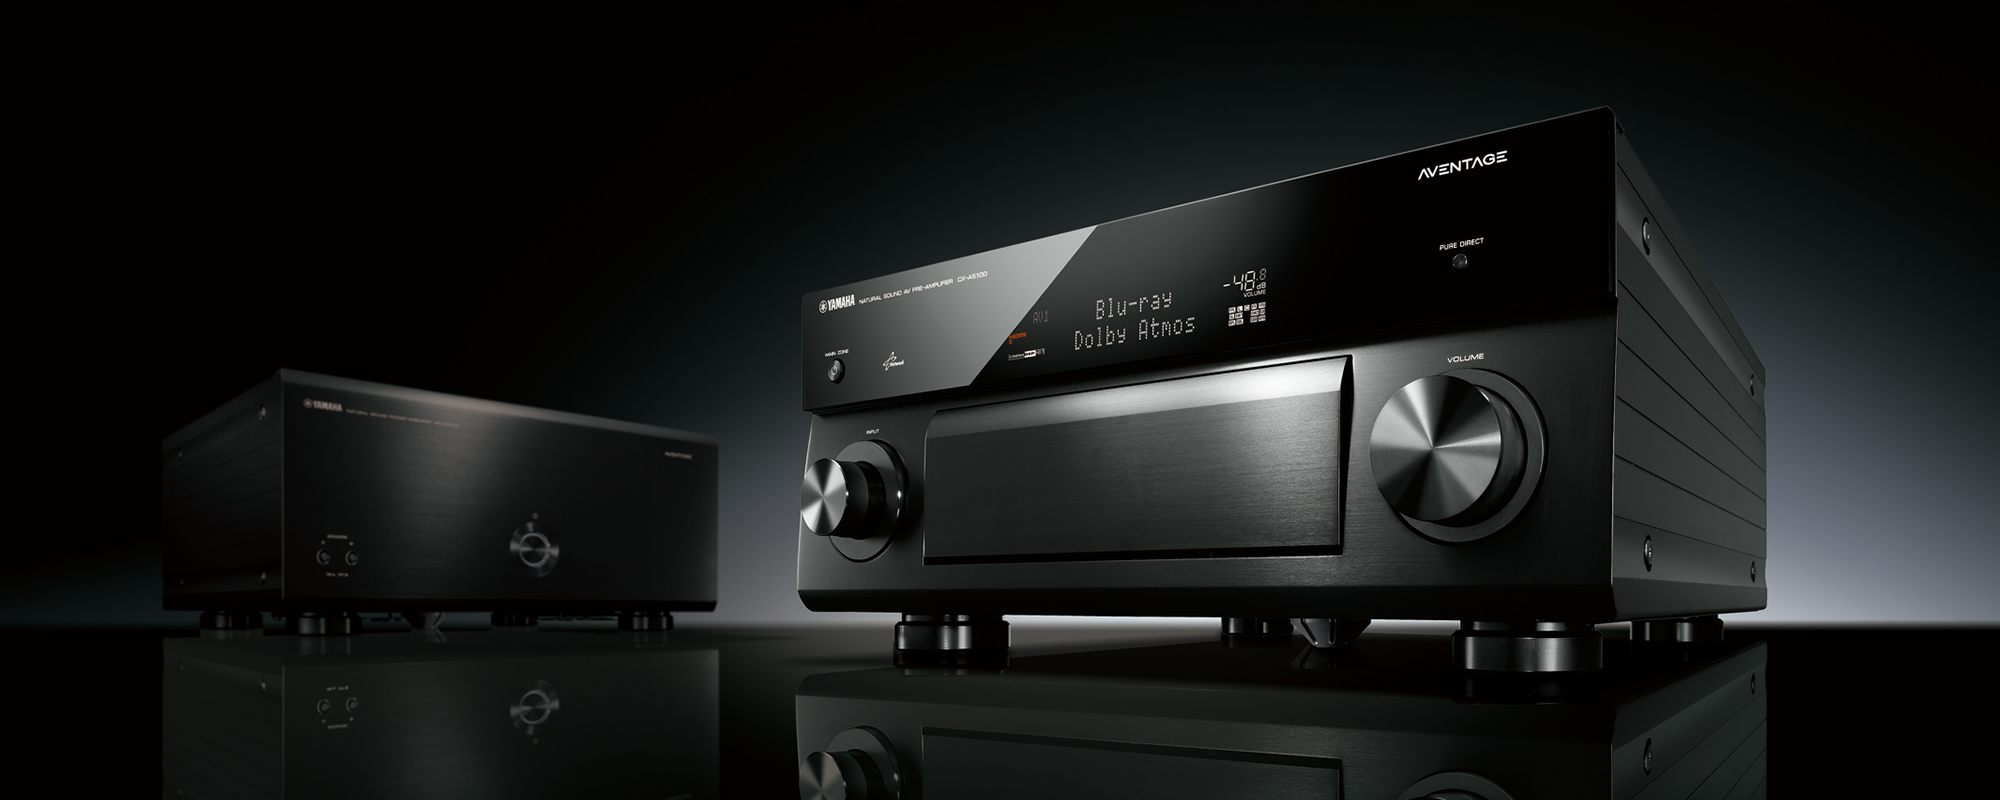 CX-A5100 - Overview - AV Receivers - Audio & Visual - Yamaha USA